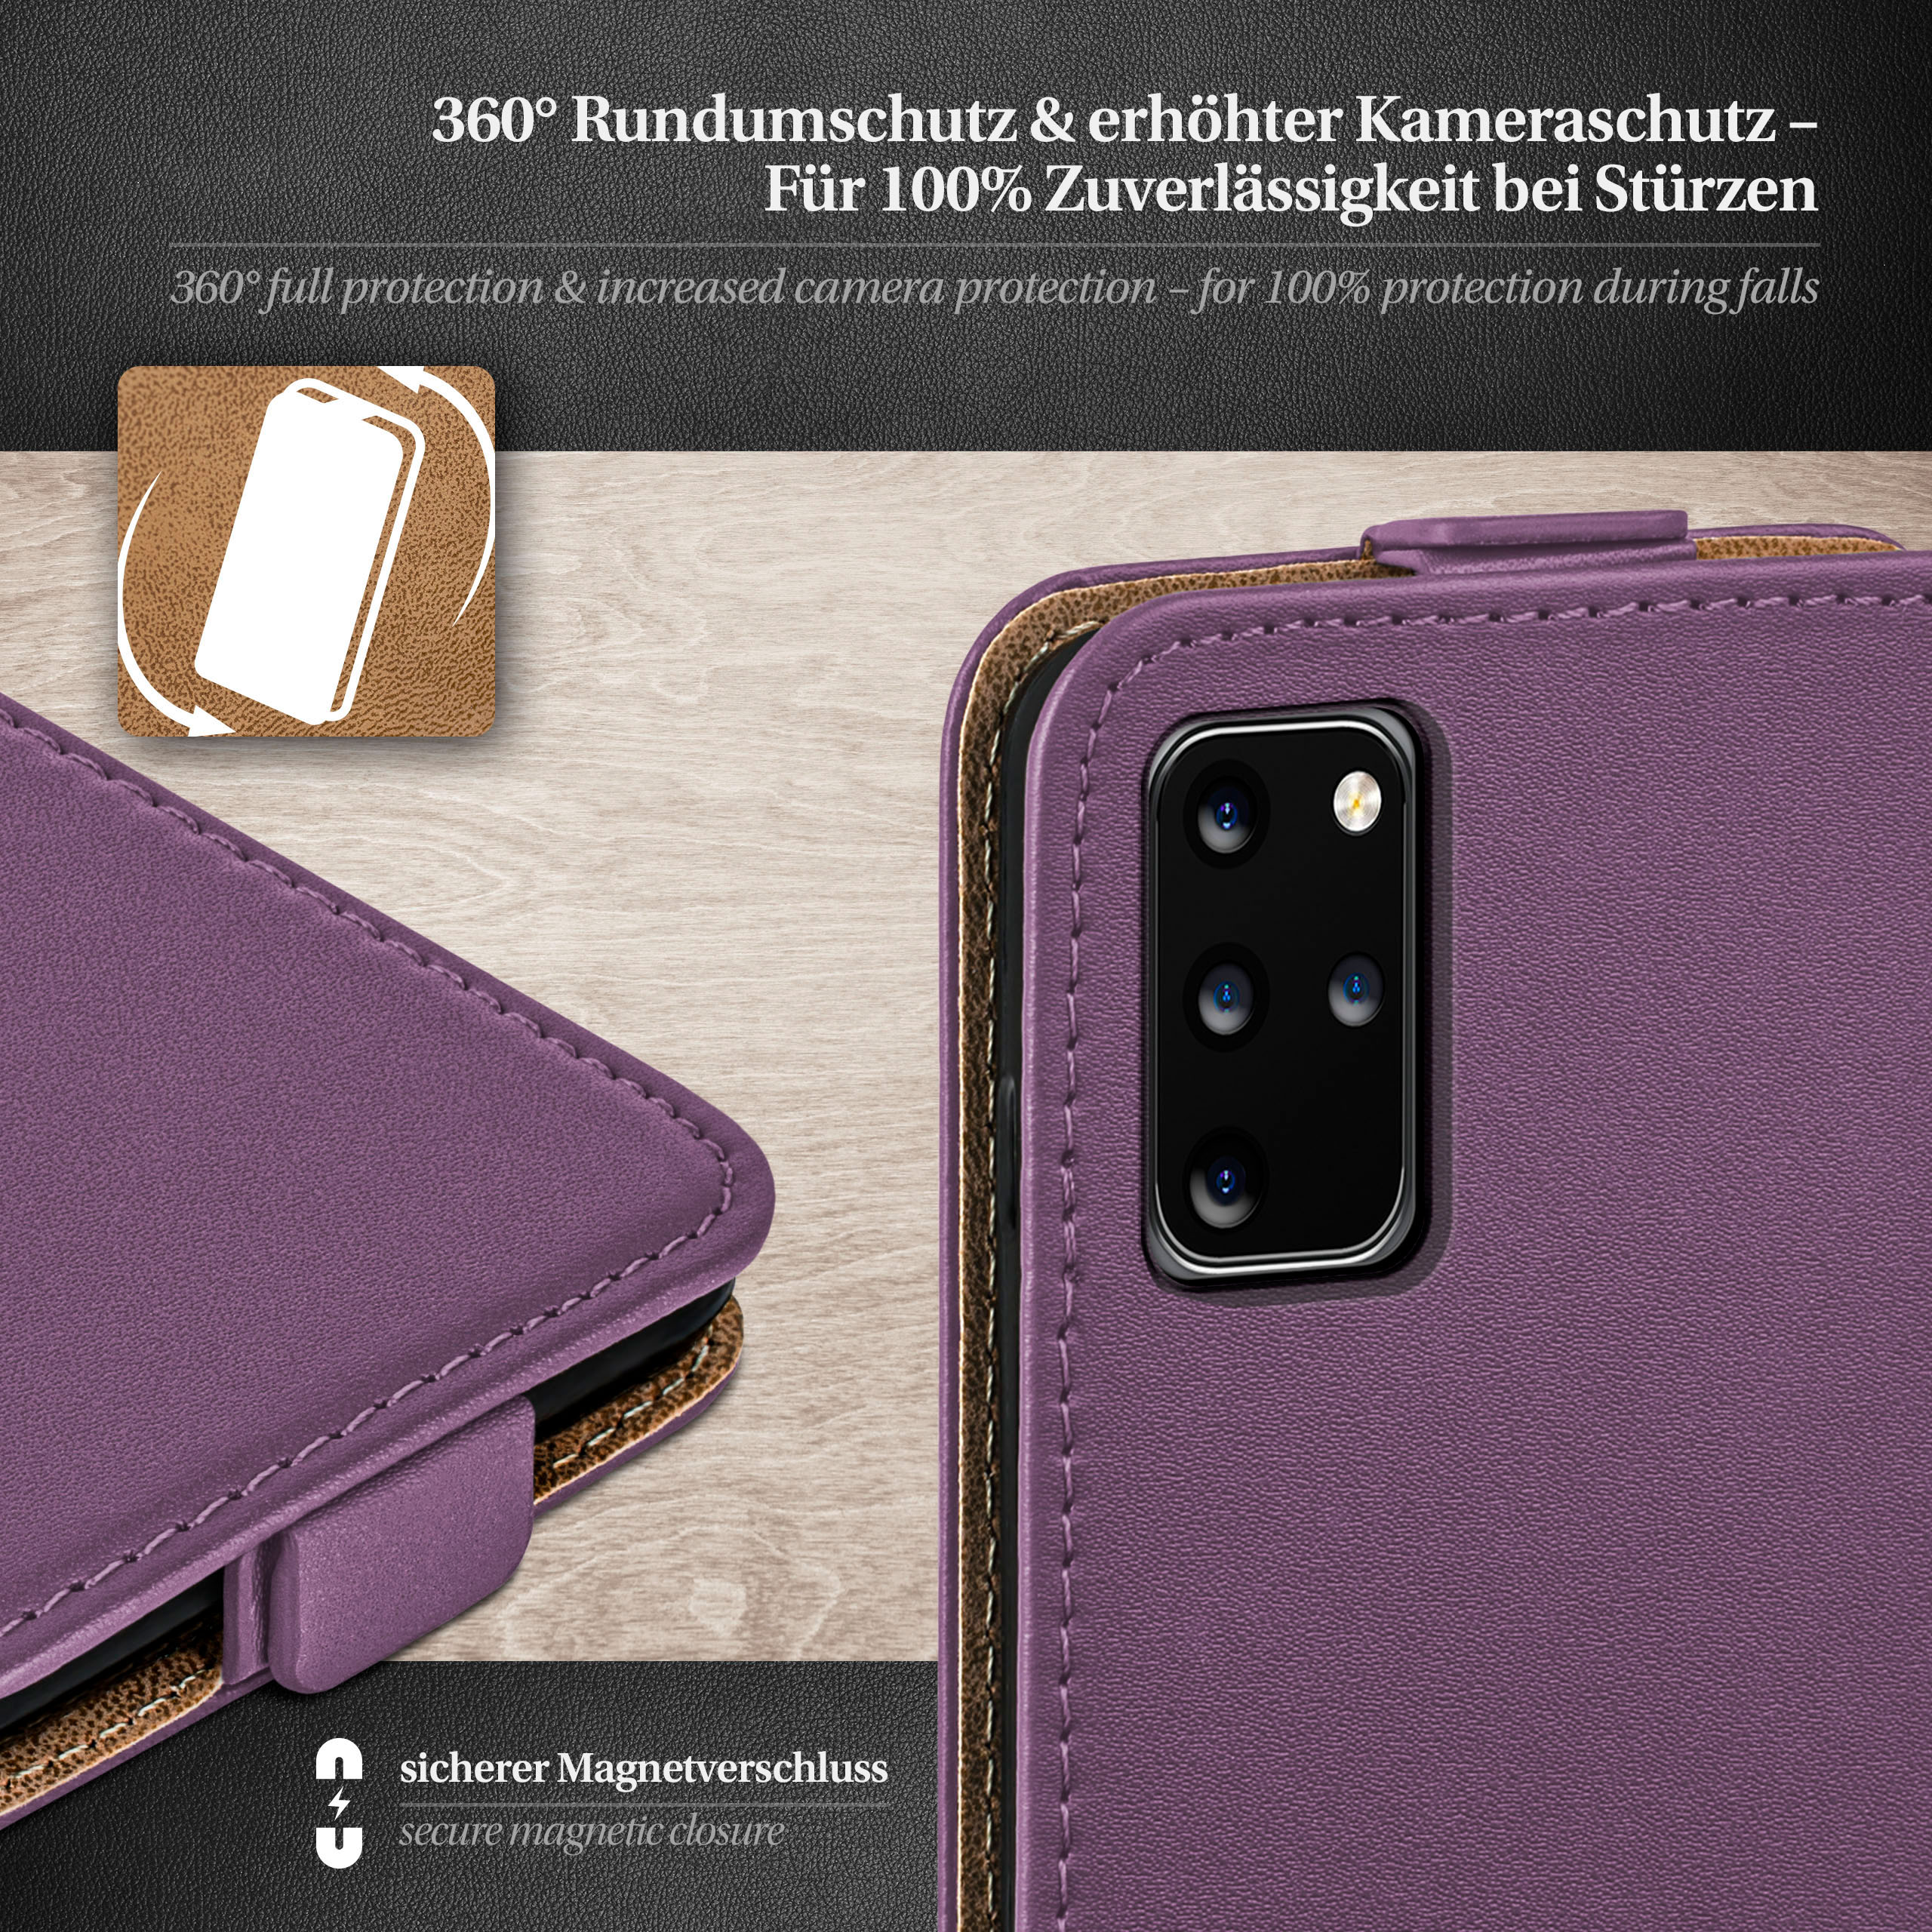 Galaxy Plus S20 Indigo-Violet Case, Cover, Flip 5G, Flip Samsung, MOEX /